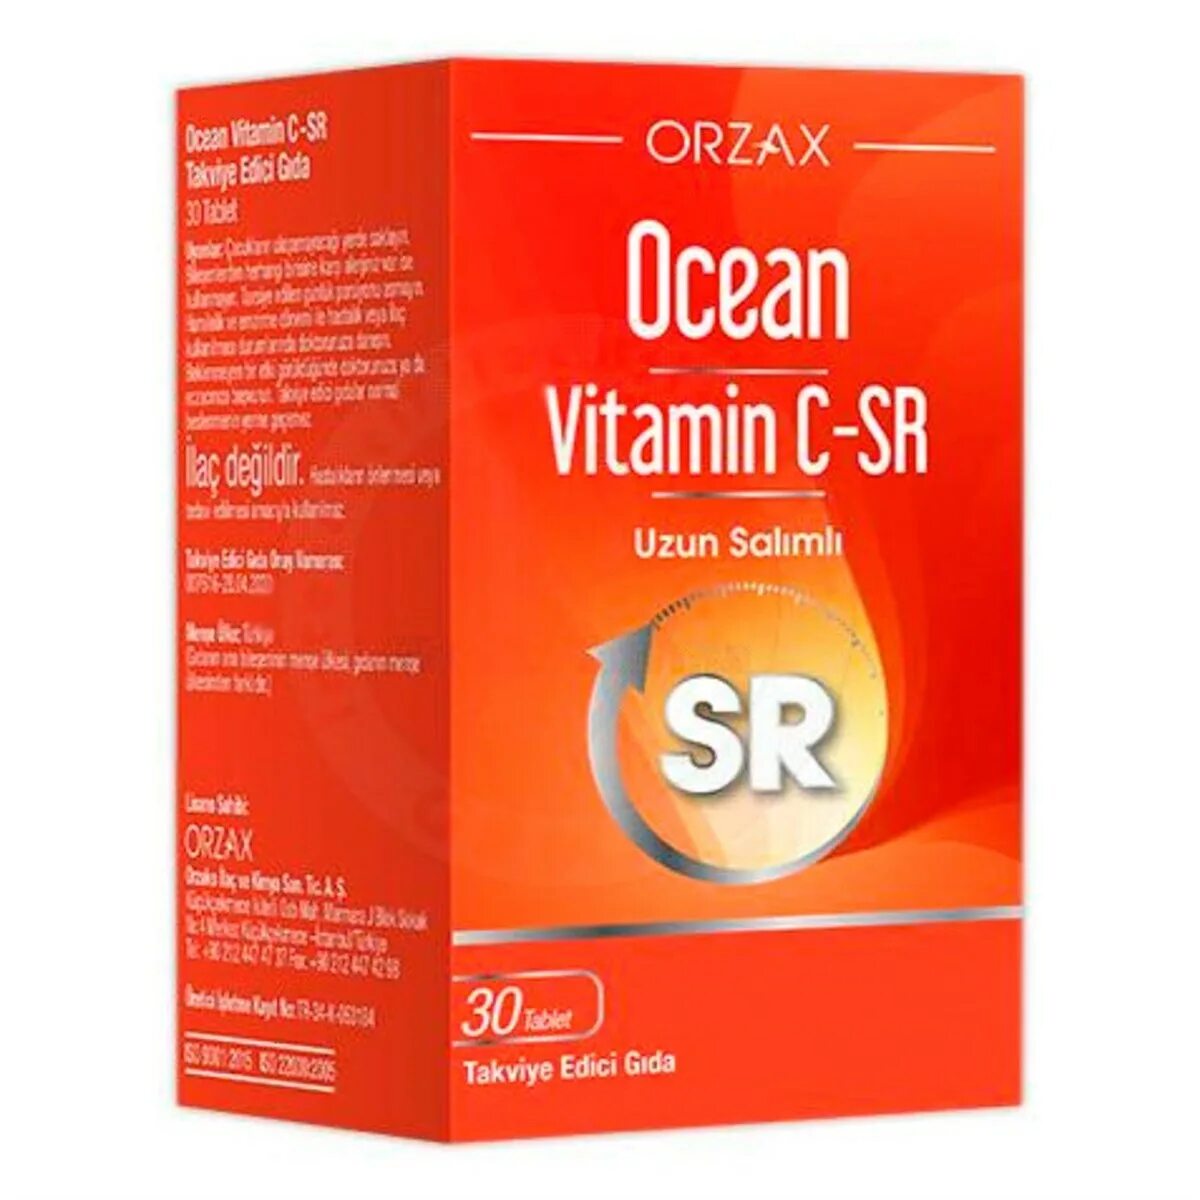 Orzax Ocean Vitamin c 1000mg. Ocean Vitamin c SR 500 MG 30 Tablet. Ocean Vitamin c-SR 30 Tablets. Турецкие витамины Ocean Orzax.